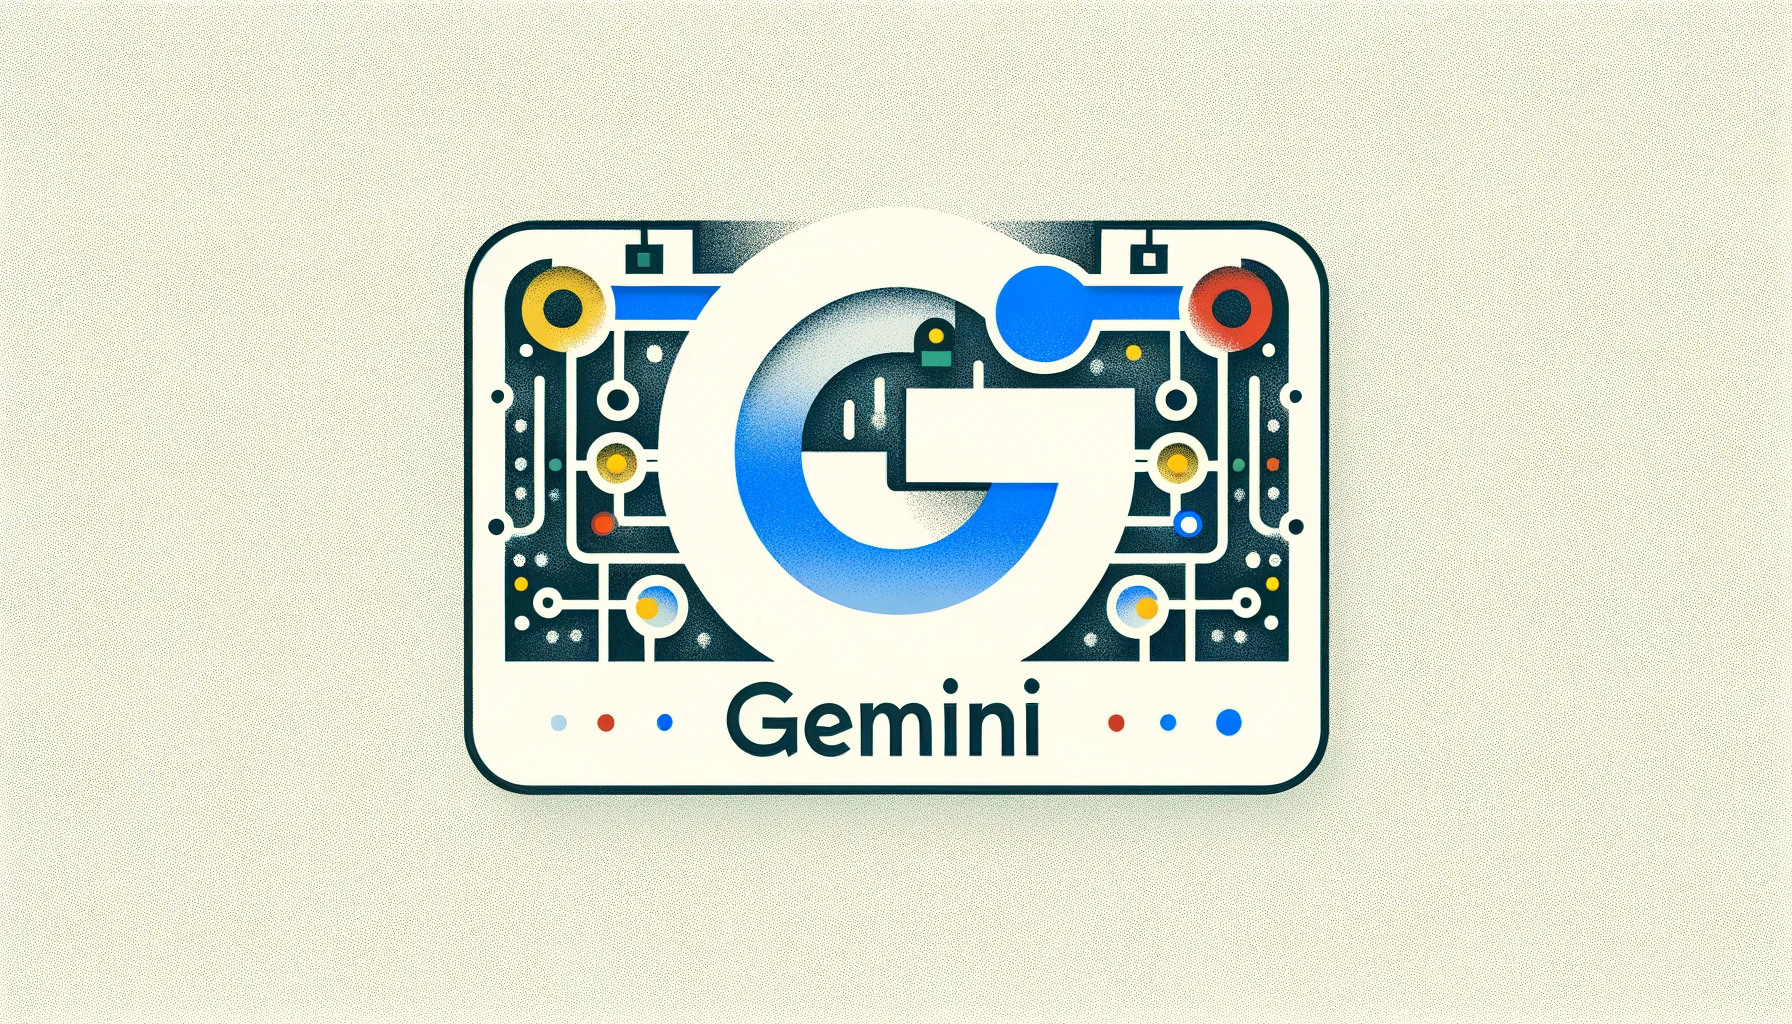 Google’s Gemini AI – The New Horizon in Artificial Intelligence